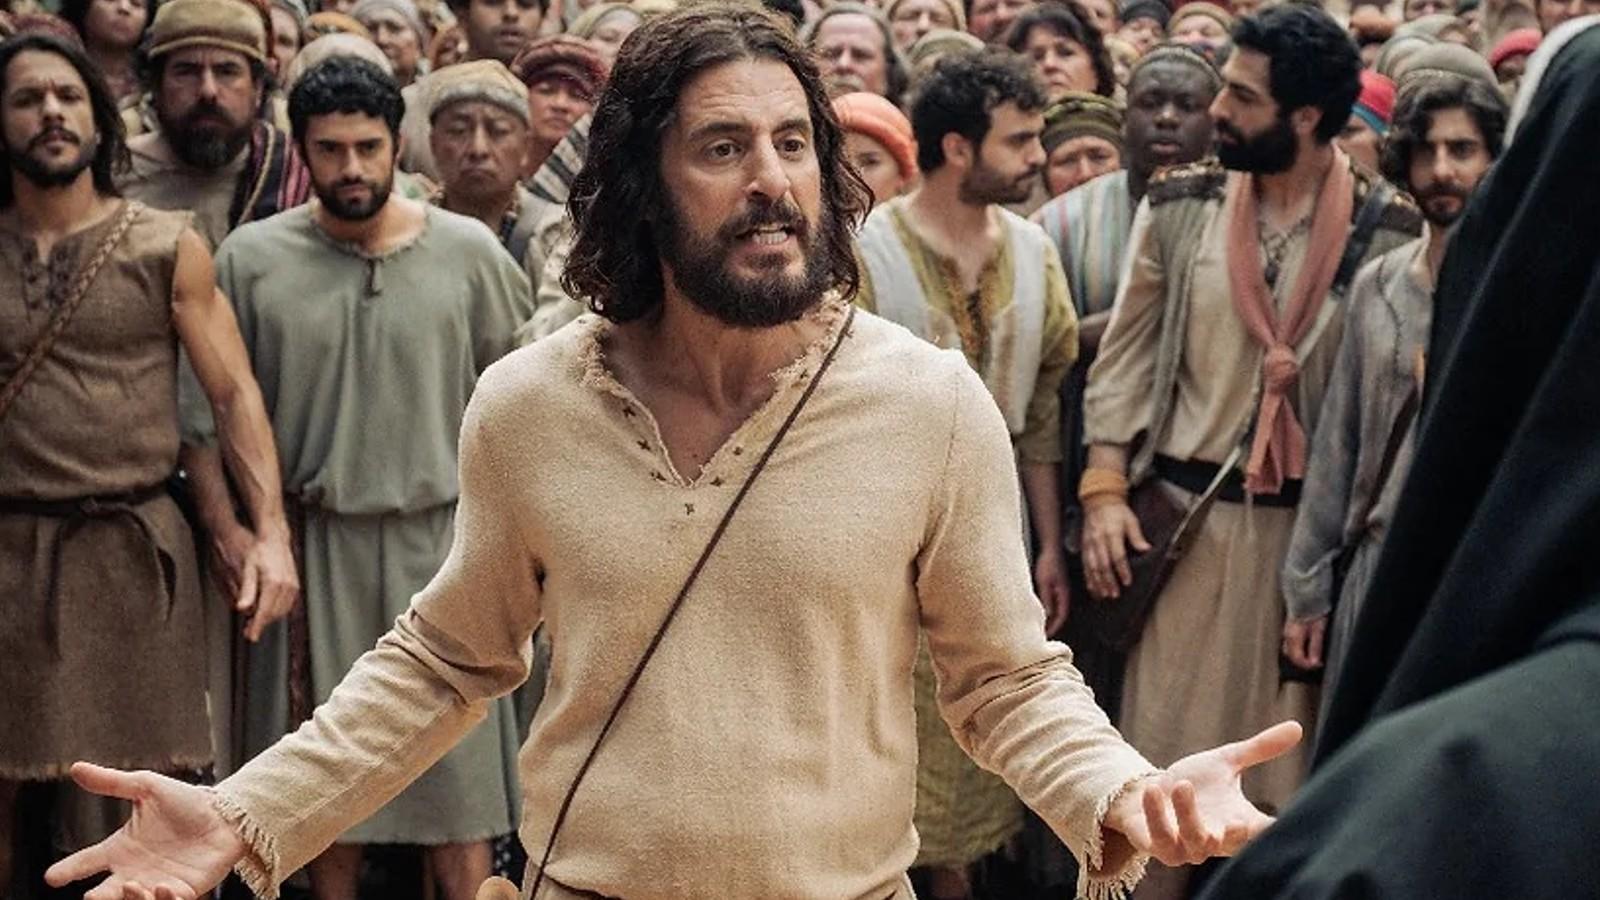 Jonathan Roumie as Jesus in The Chosen Season 4